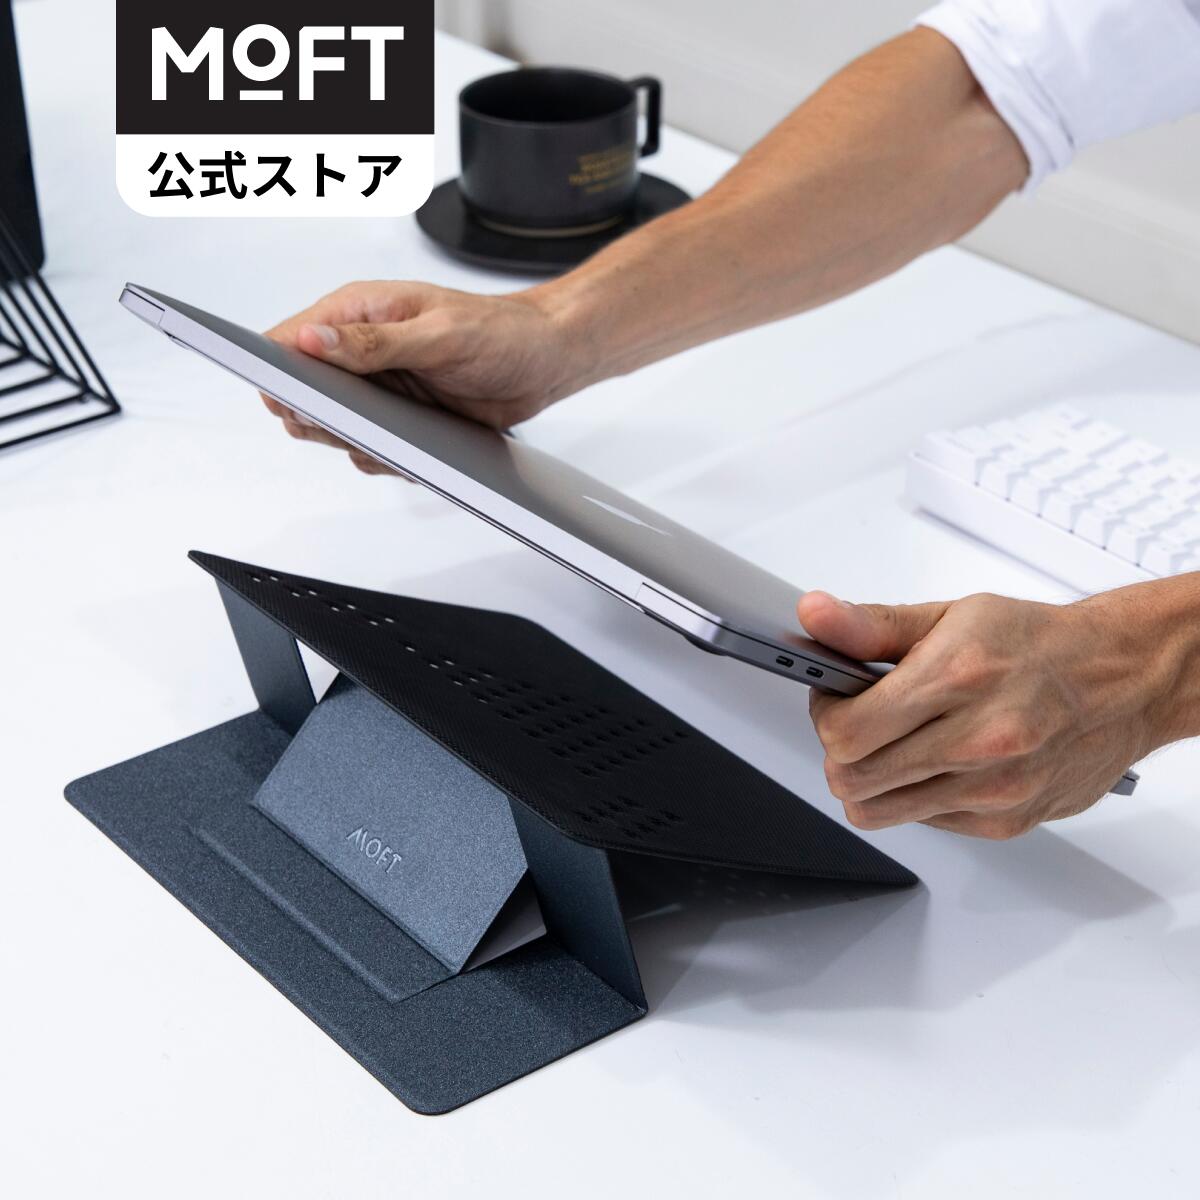 MOFT公式 パソコン スタンド 非粘着タイプ 15° 25° PCスタンド タブレットスタンド 二段階調整可能 15.6インチまで対応 コンパクト 収納 放熱穴付き 折り畳式 腰痛防止